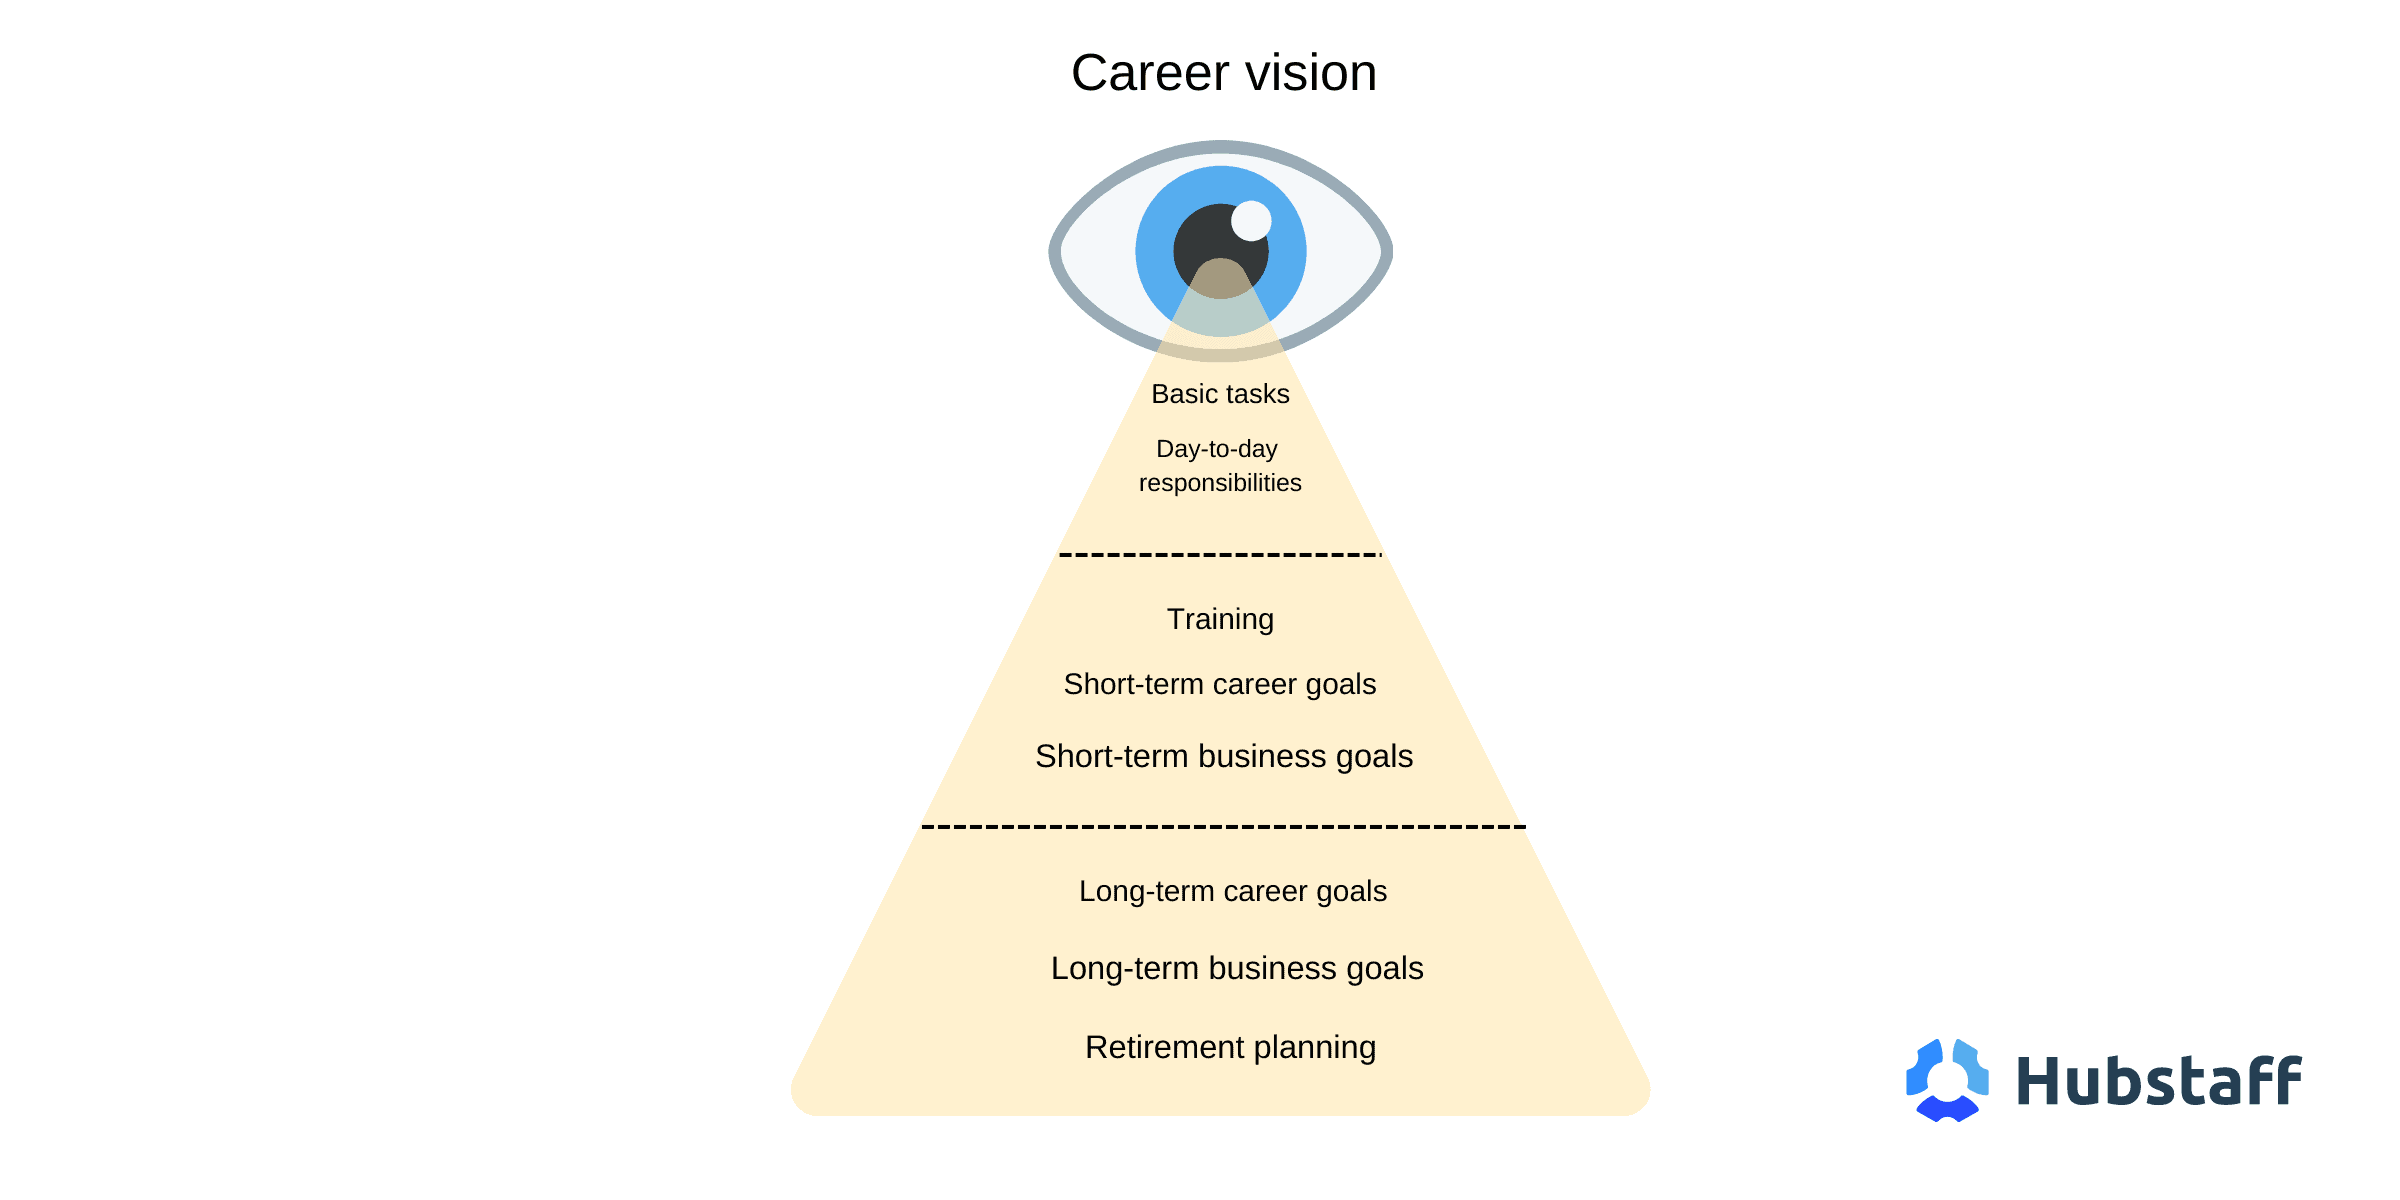 Career vision